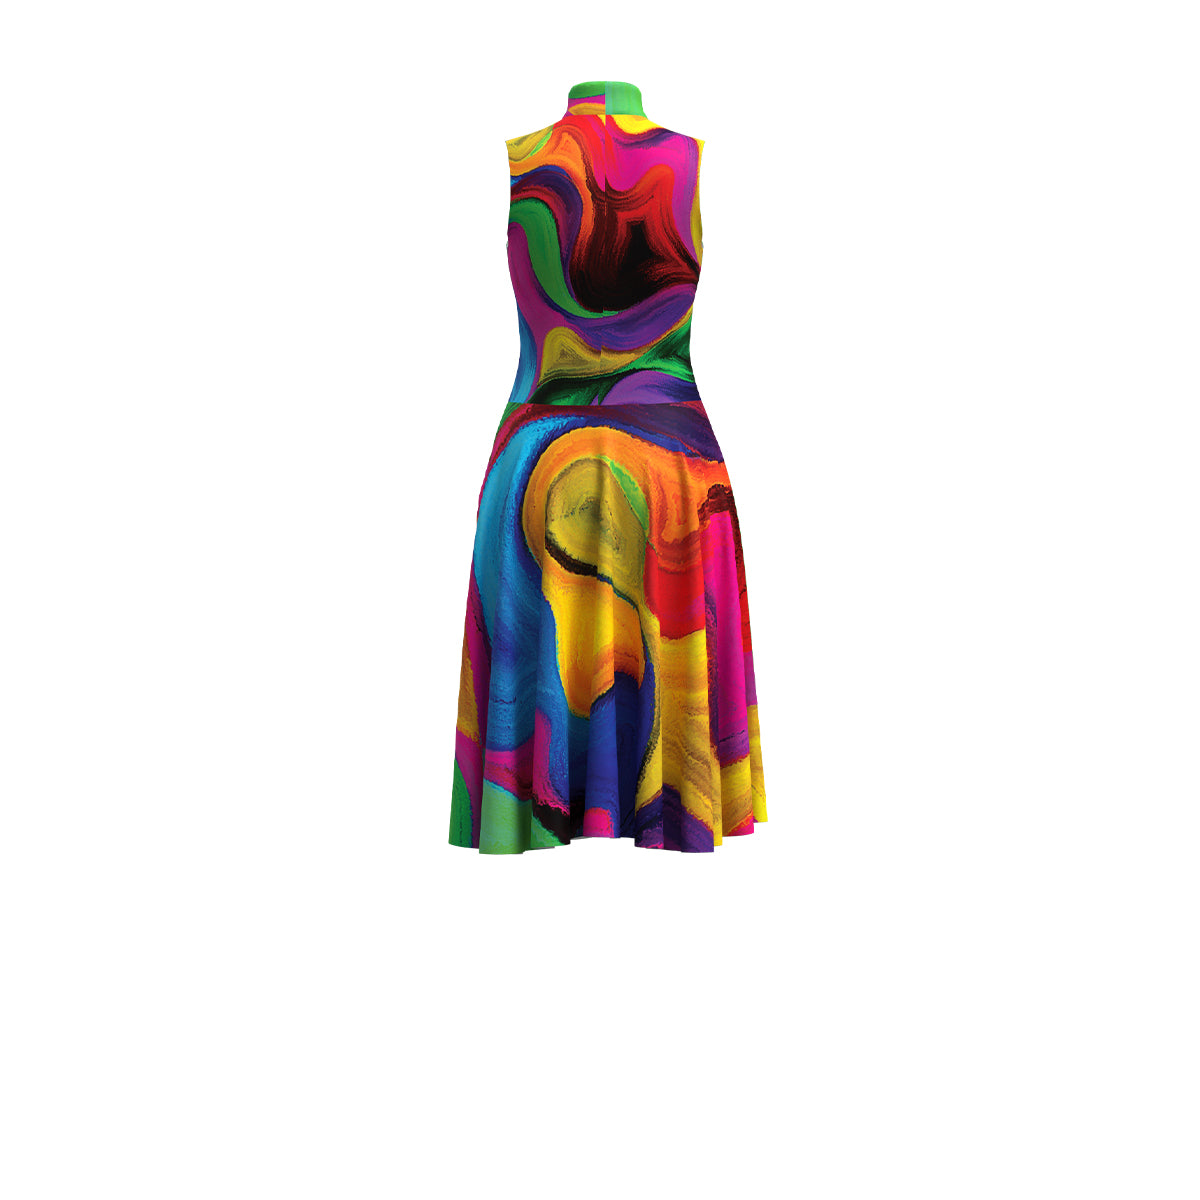 Wavy Rainbow Figure Dress